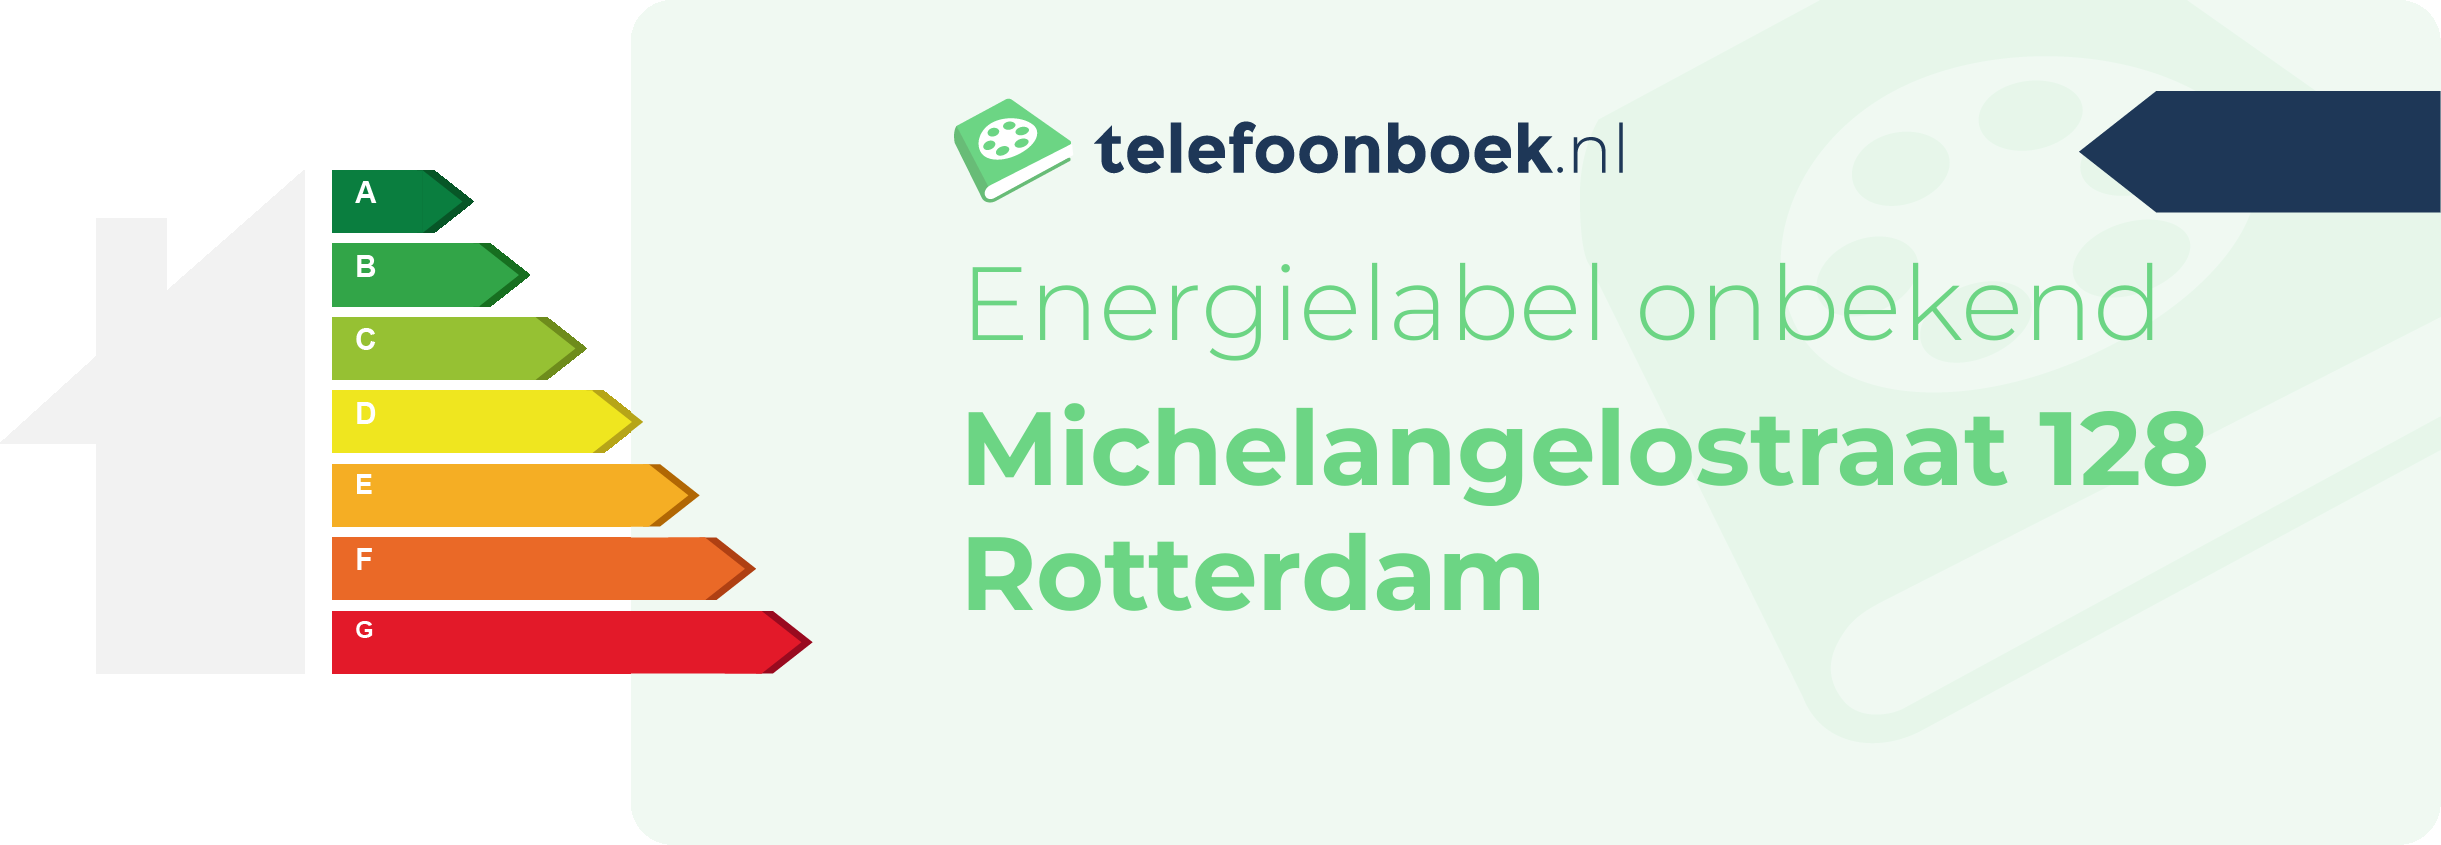 Energielabel Michelangelostraat 128 Rotterdam